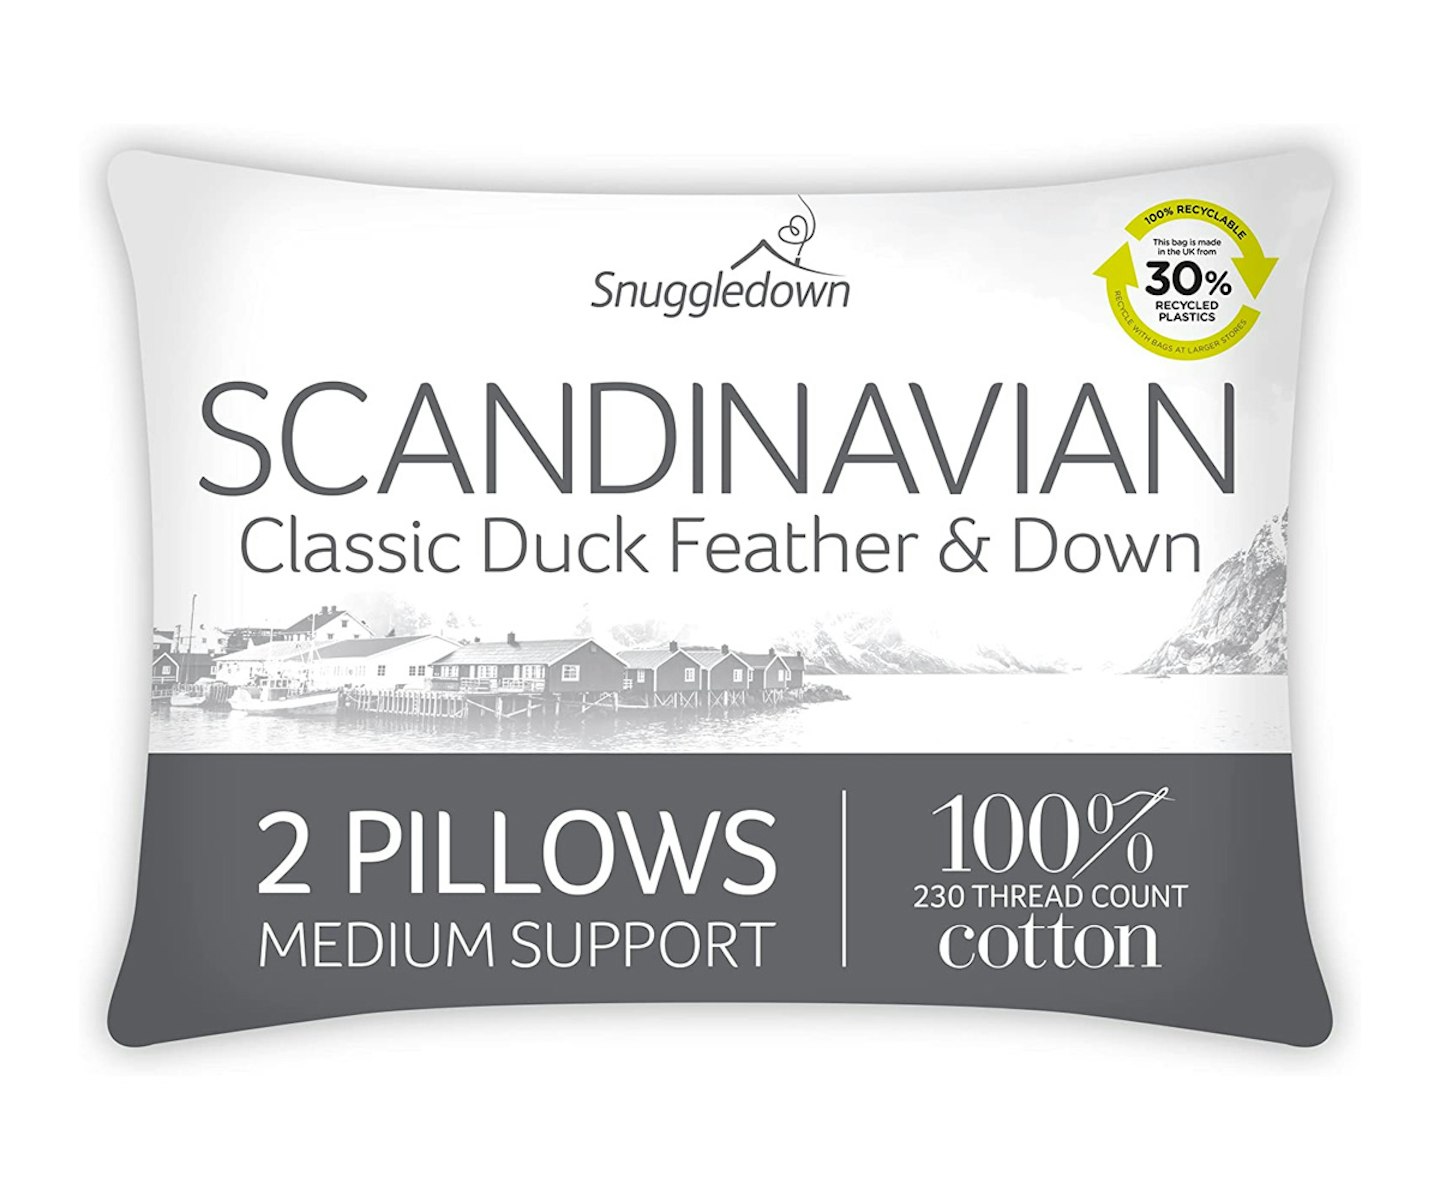 Snuggledown pillows